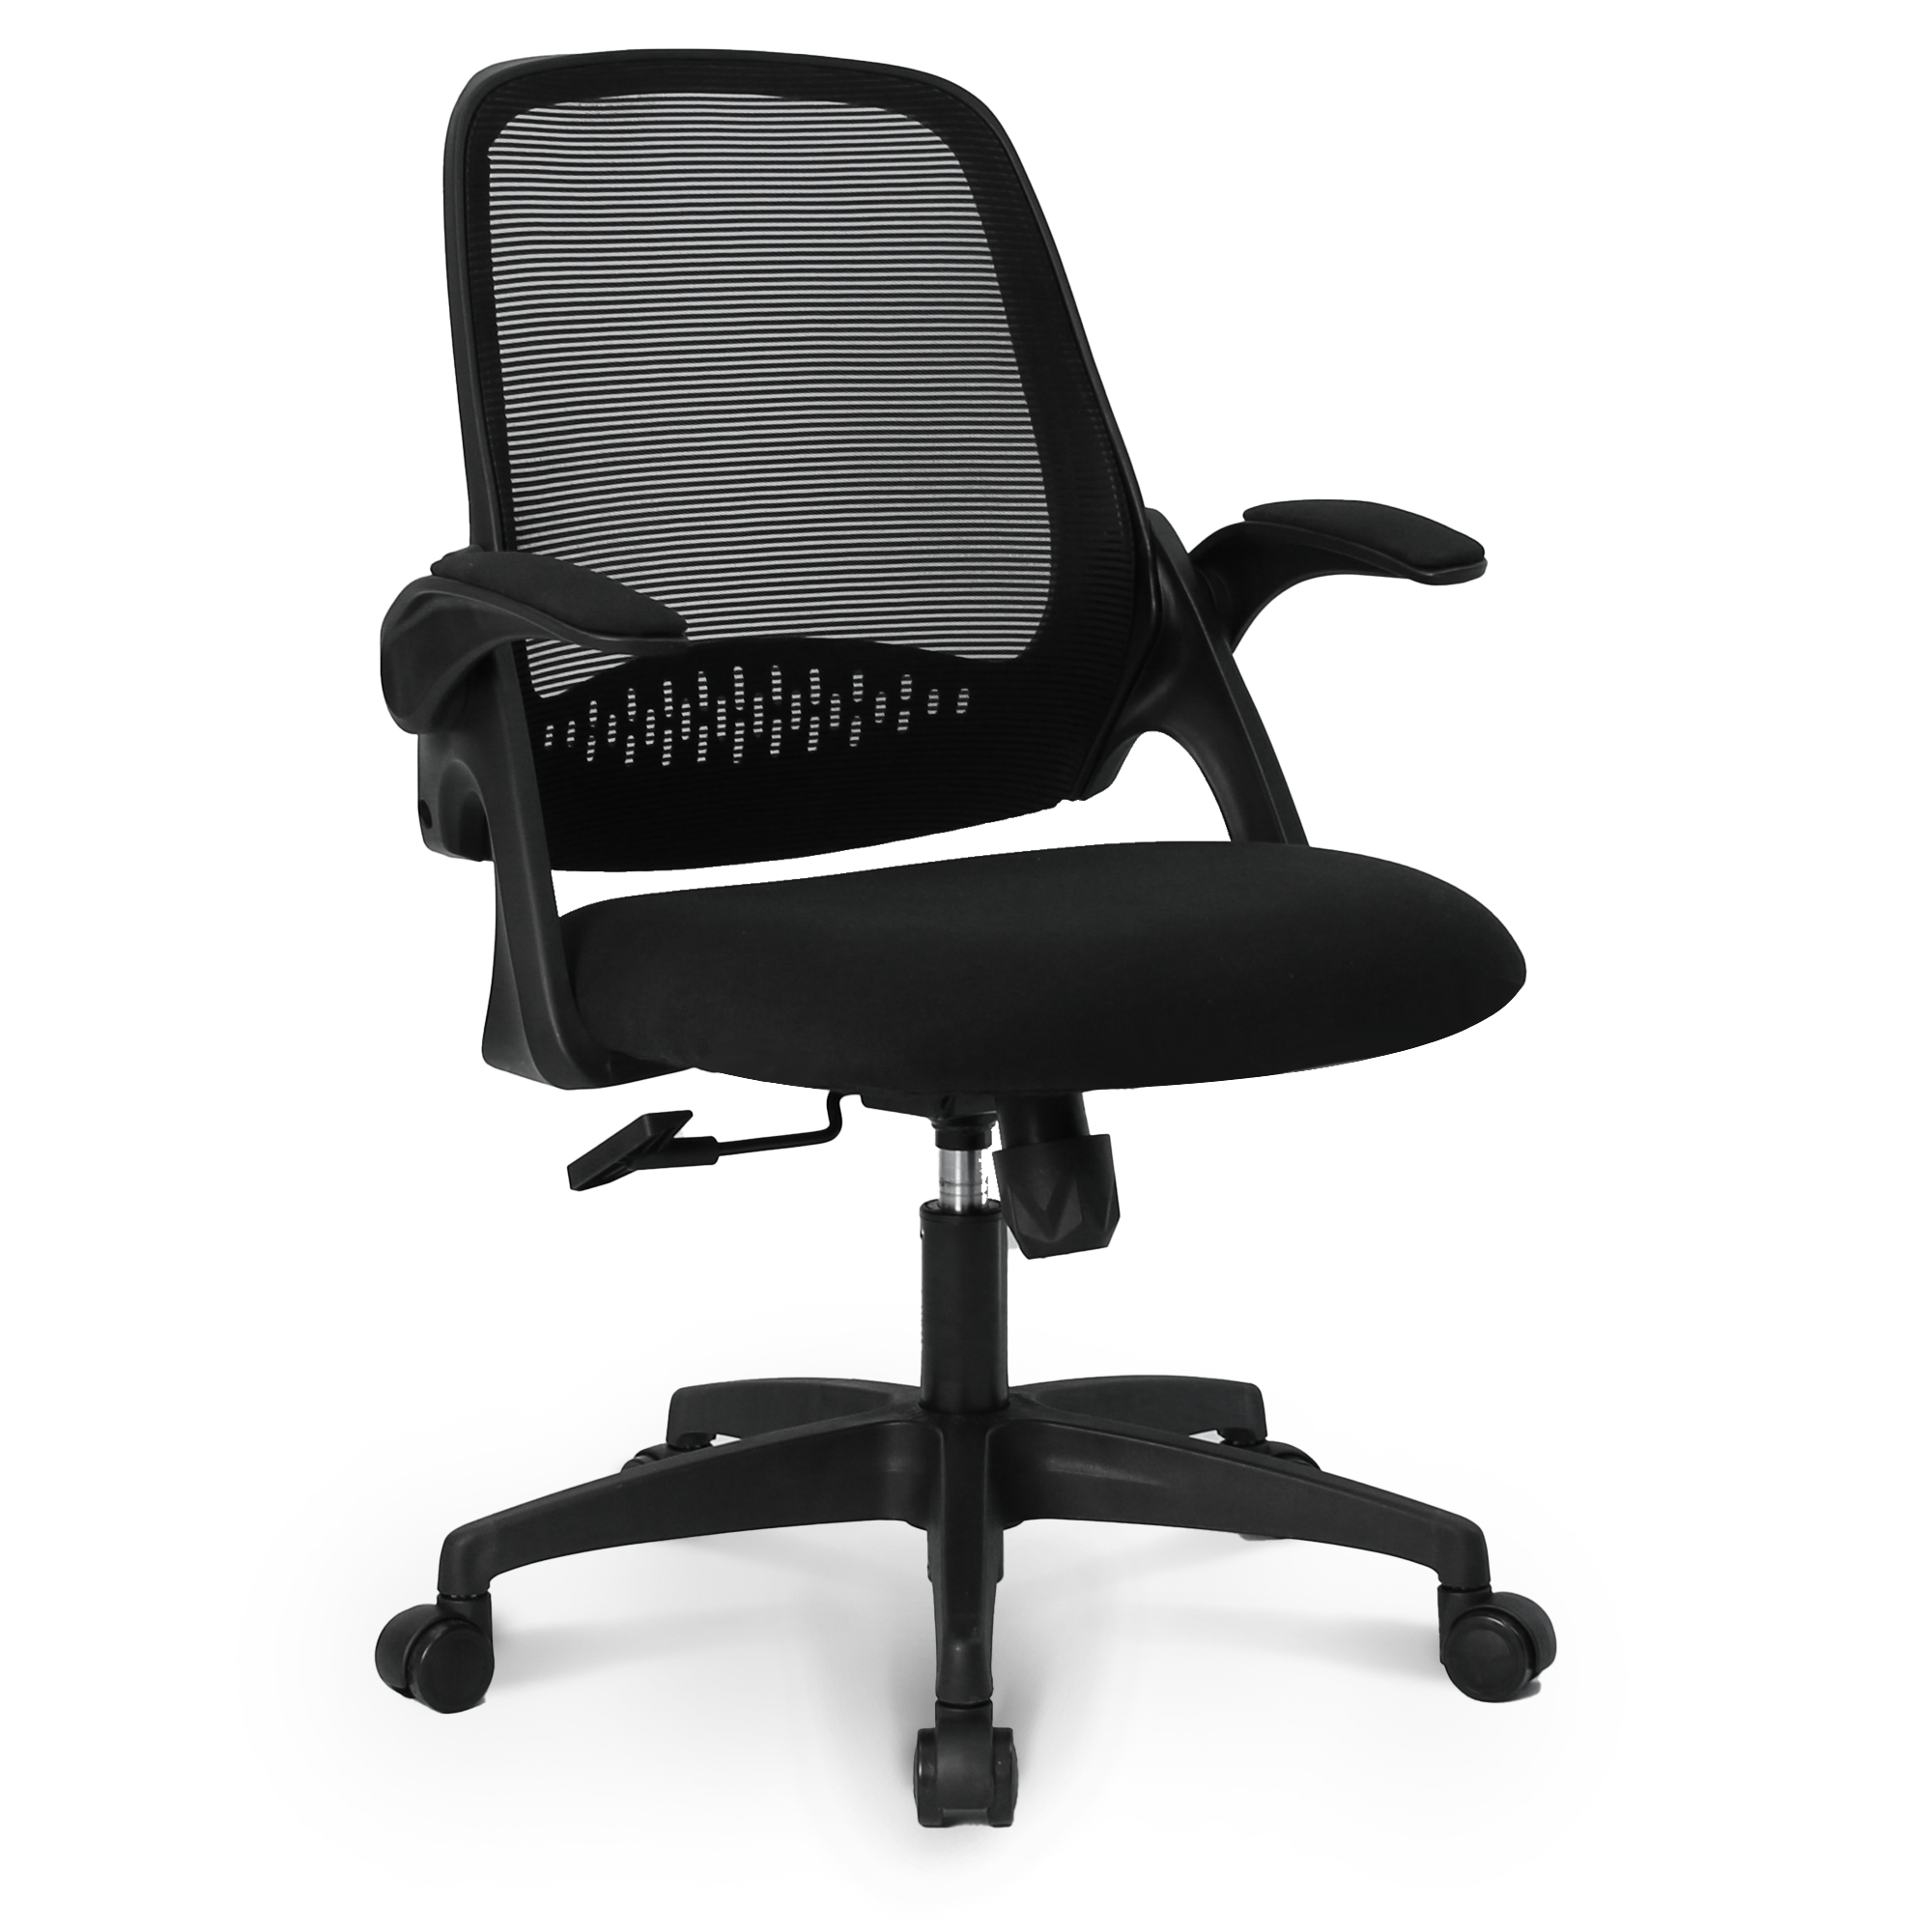 NEC mesh office chair